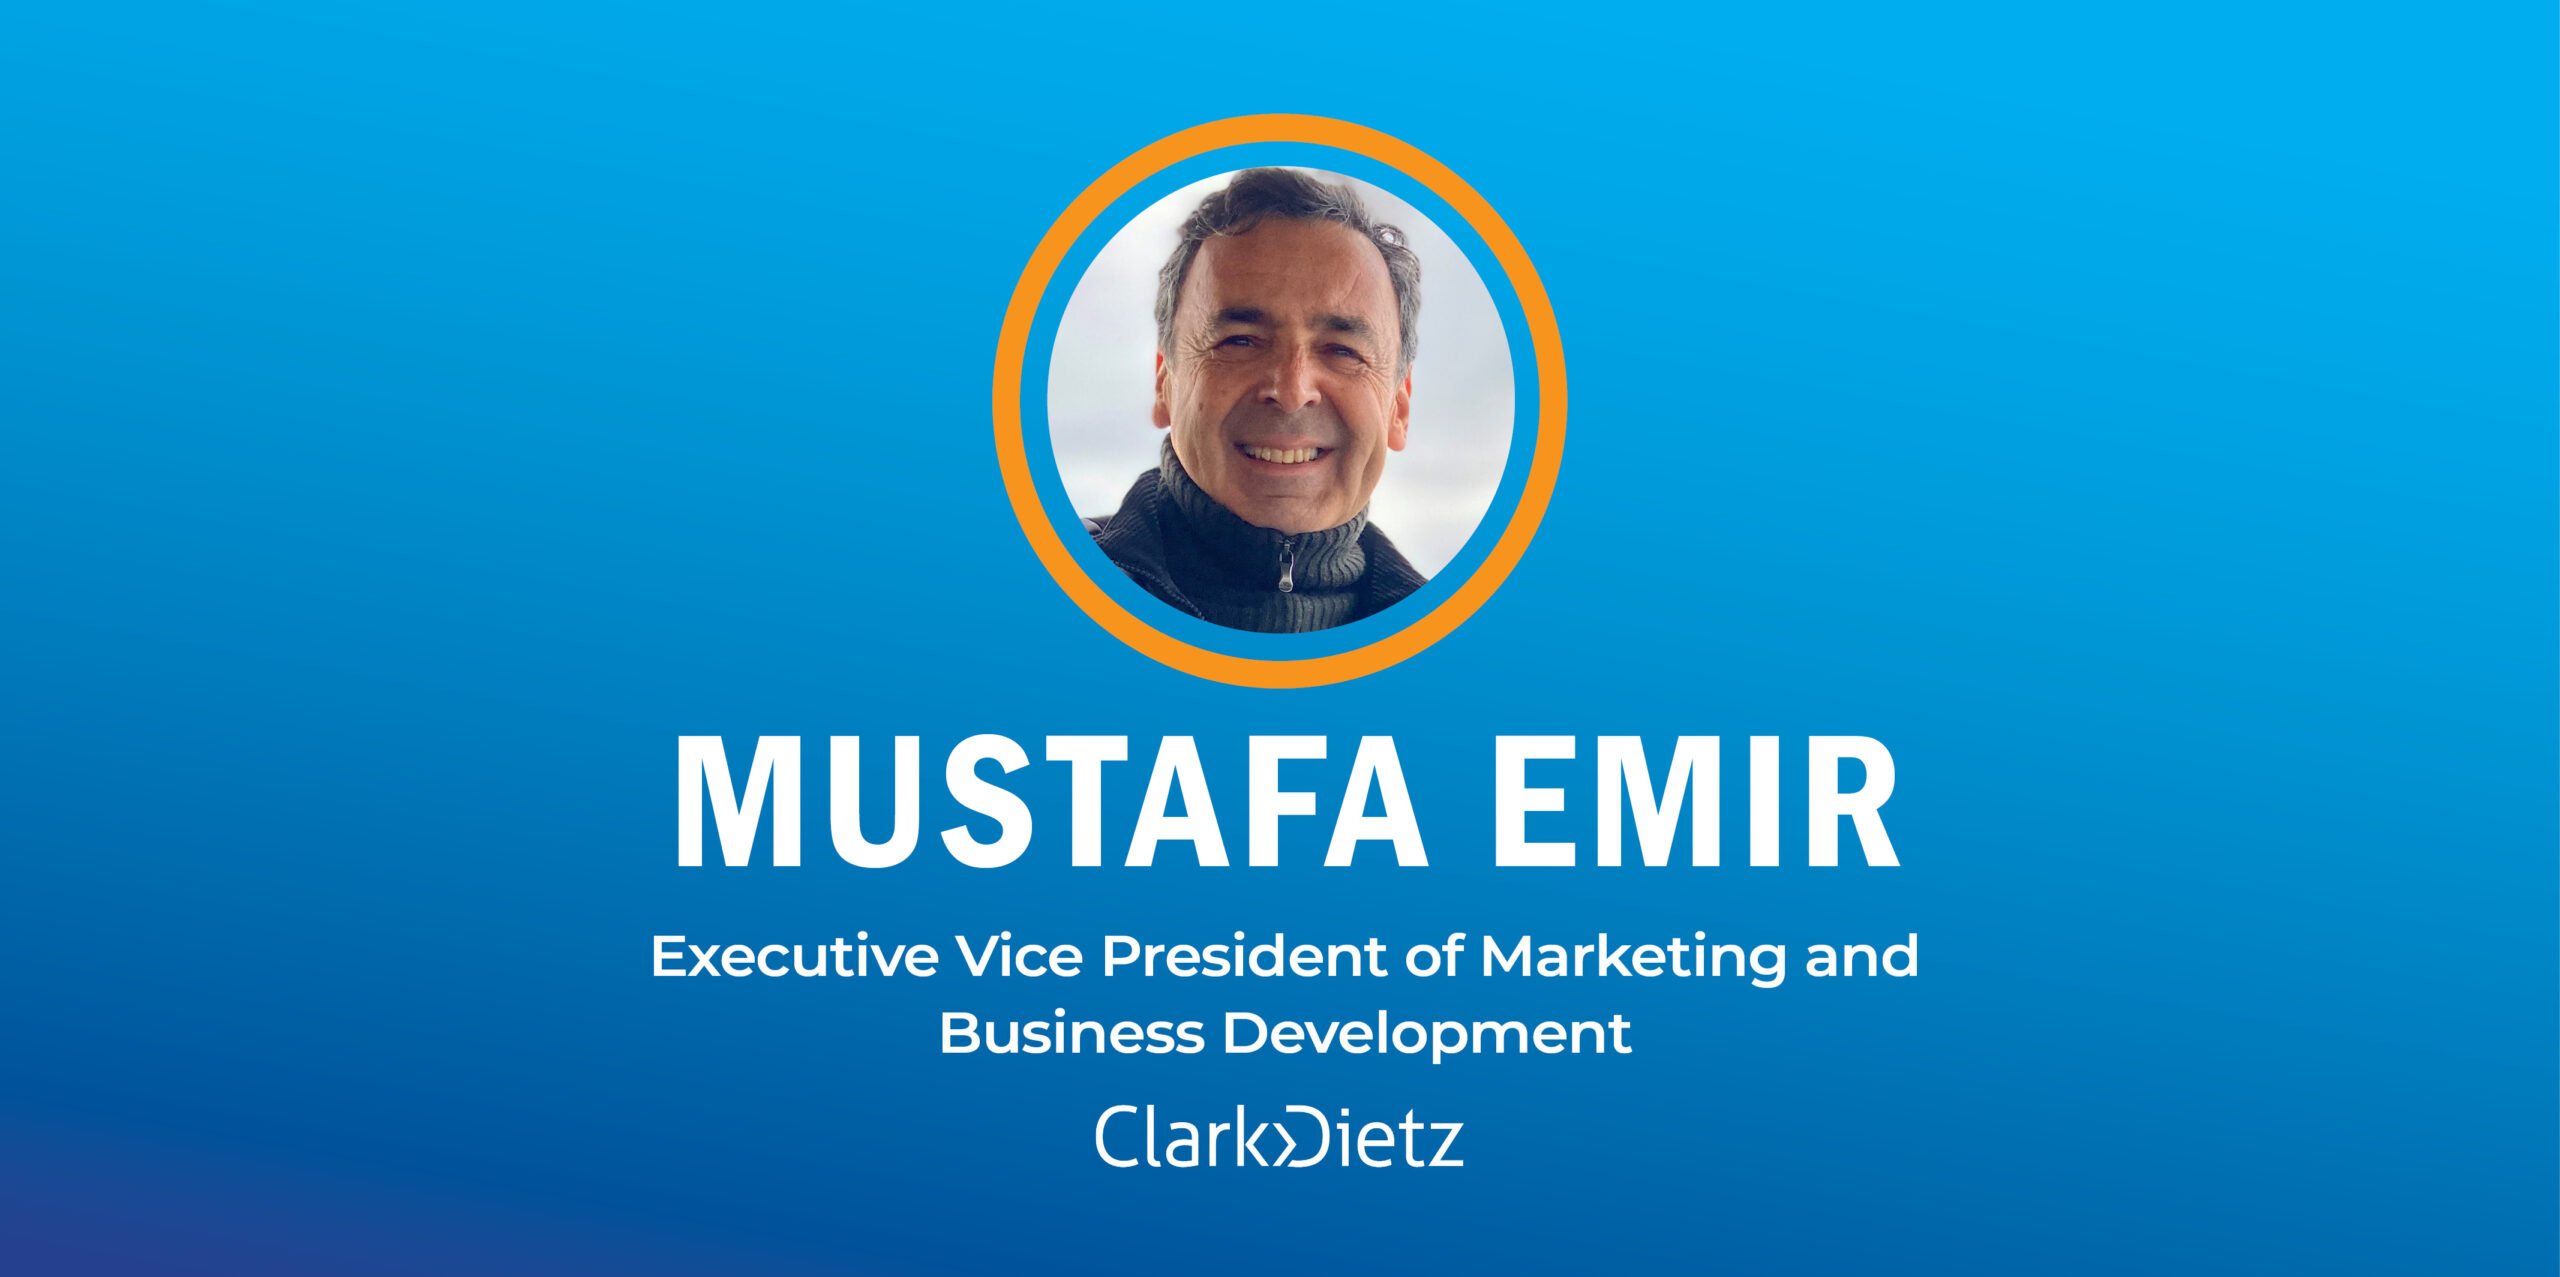 Mustafa Emir, Executive Vice President of Marketing and Business Development